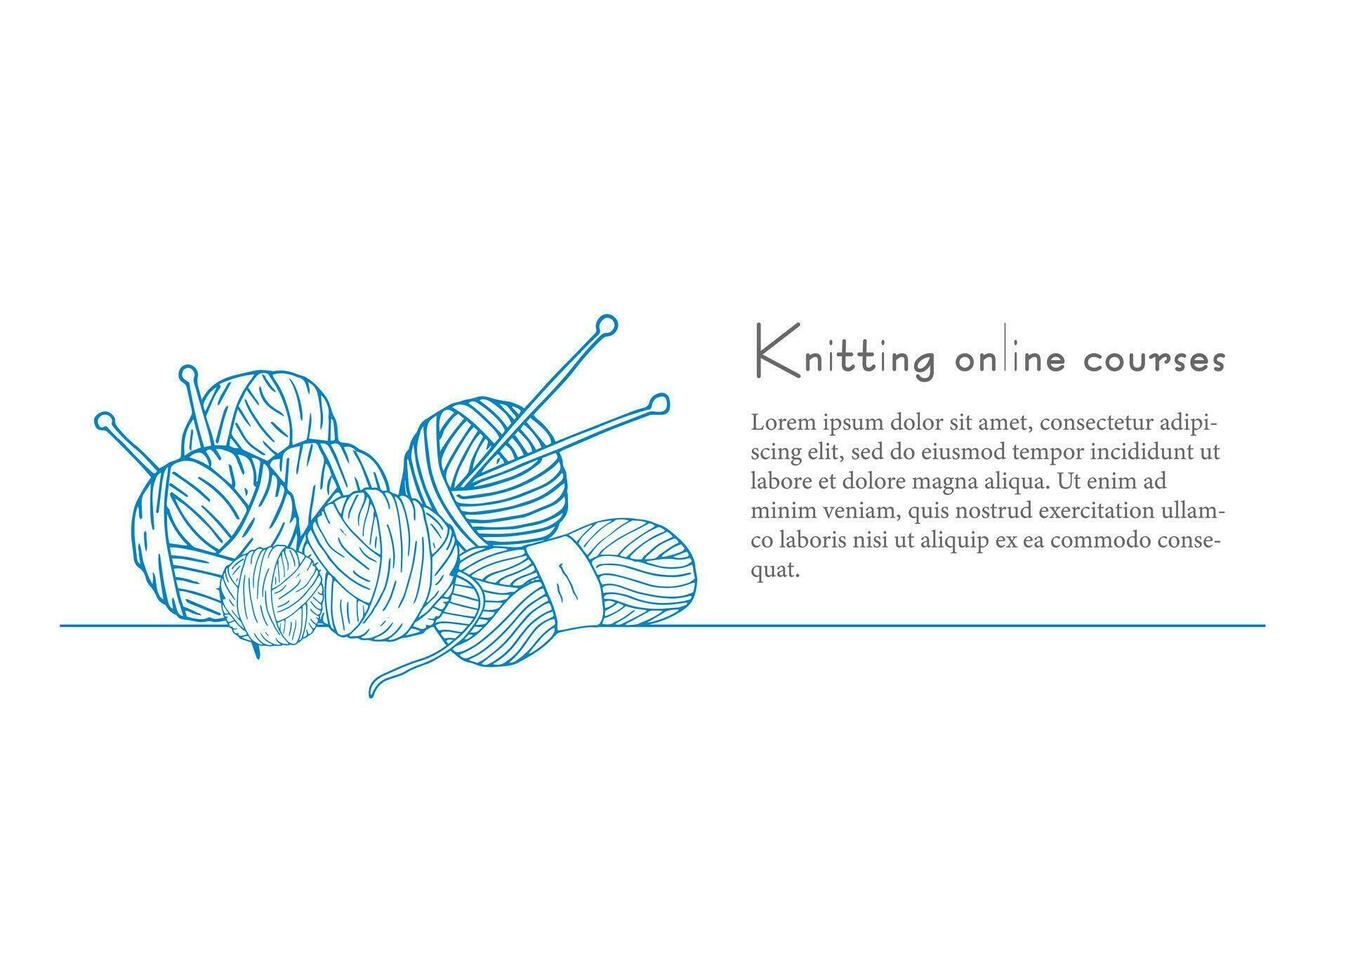 Knitting online courses banner. Hobbies Concept Banner. Knitting web banner template or landing page. vector